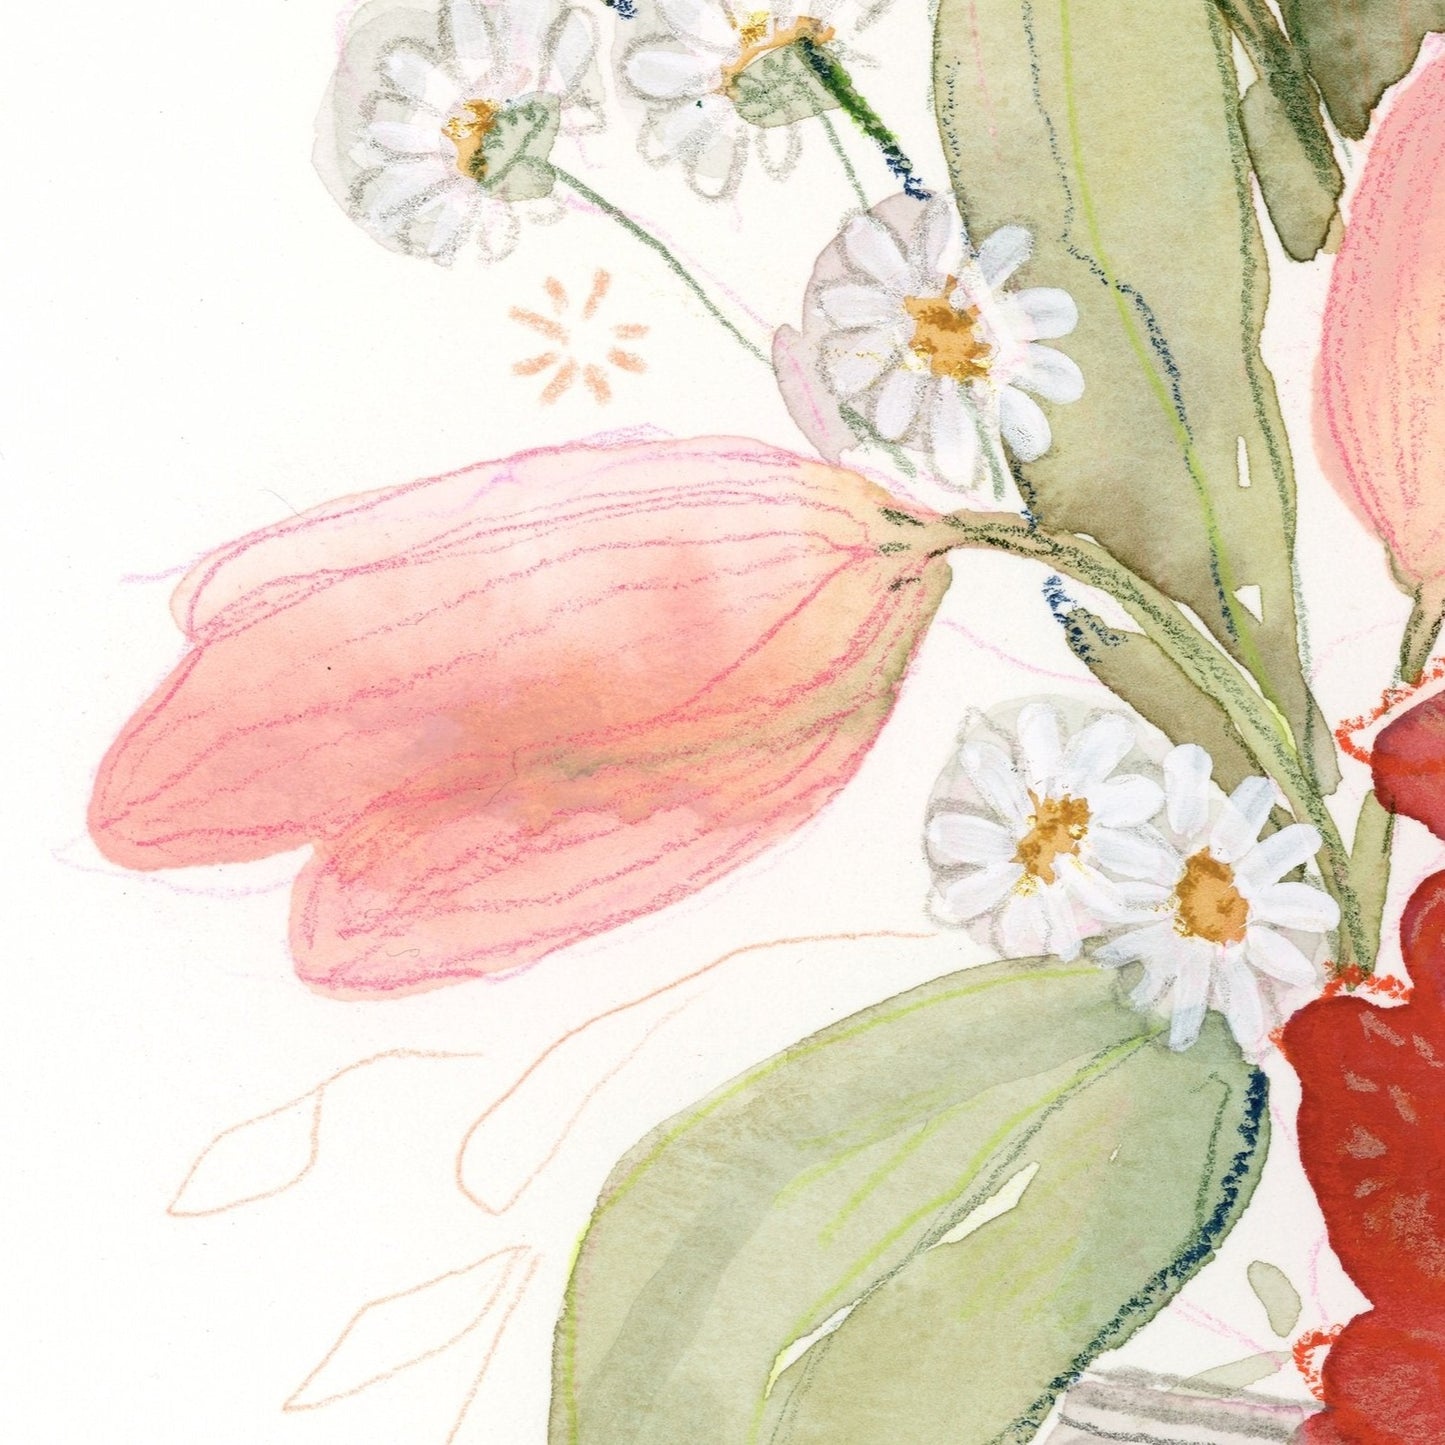 'Grid Vase Floral Study' Print + Canvas